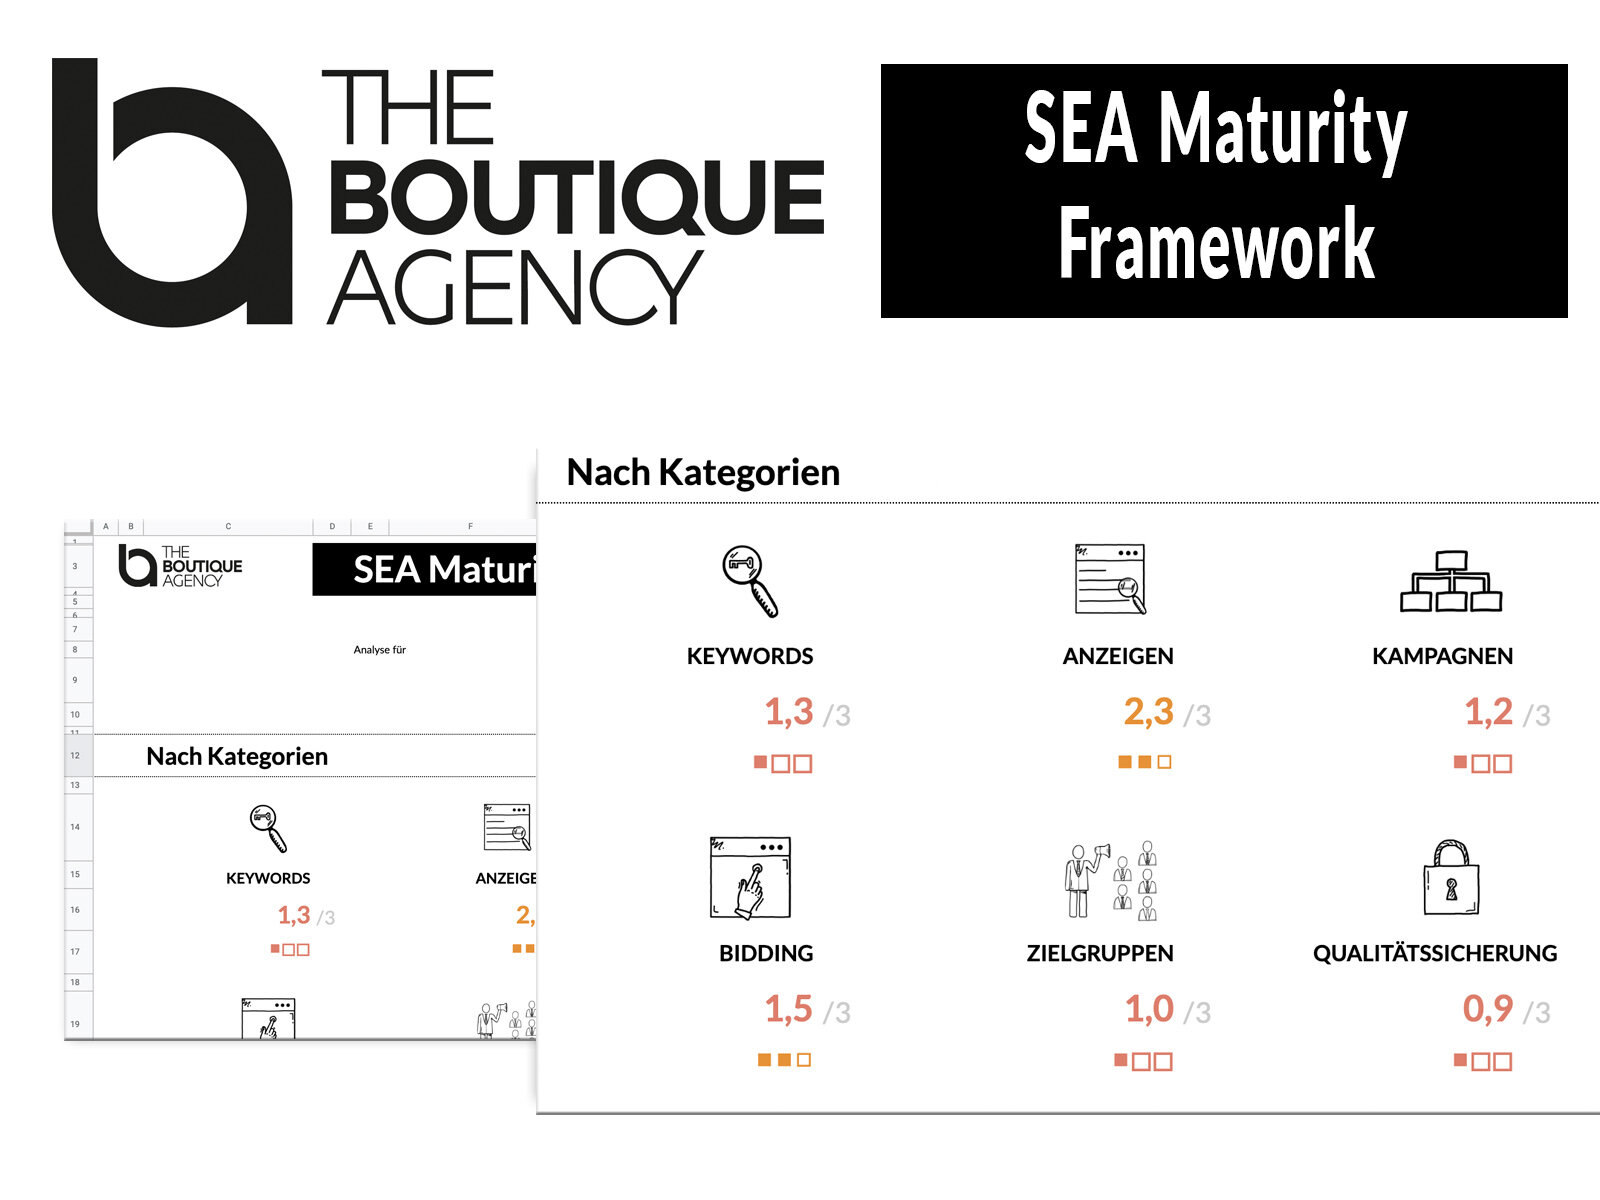 SEA Maturity Framework